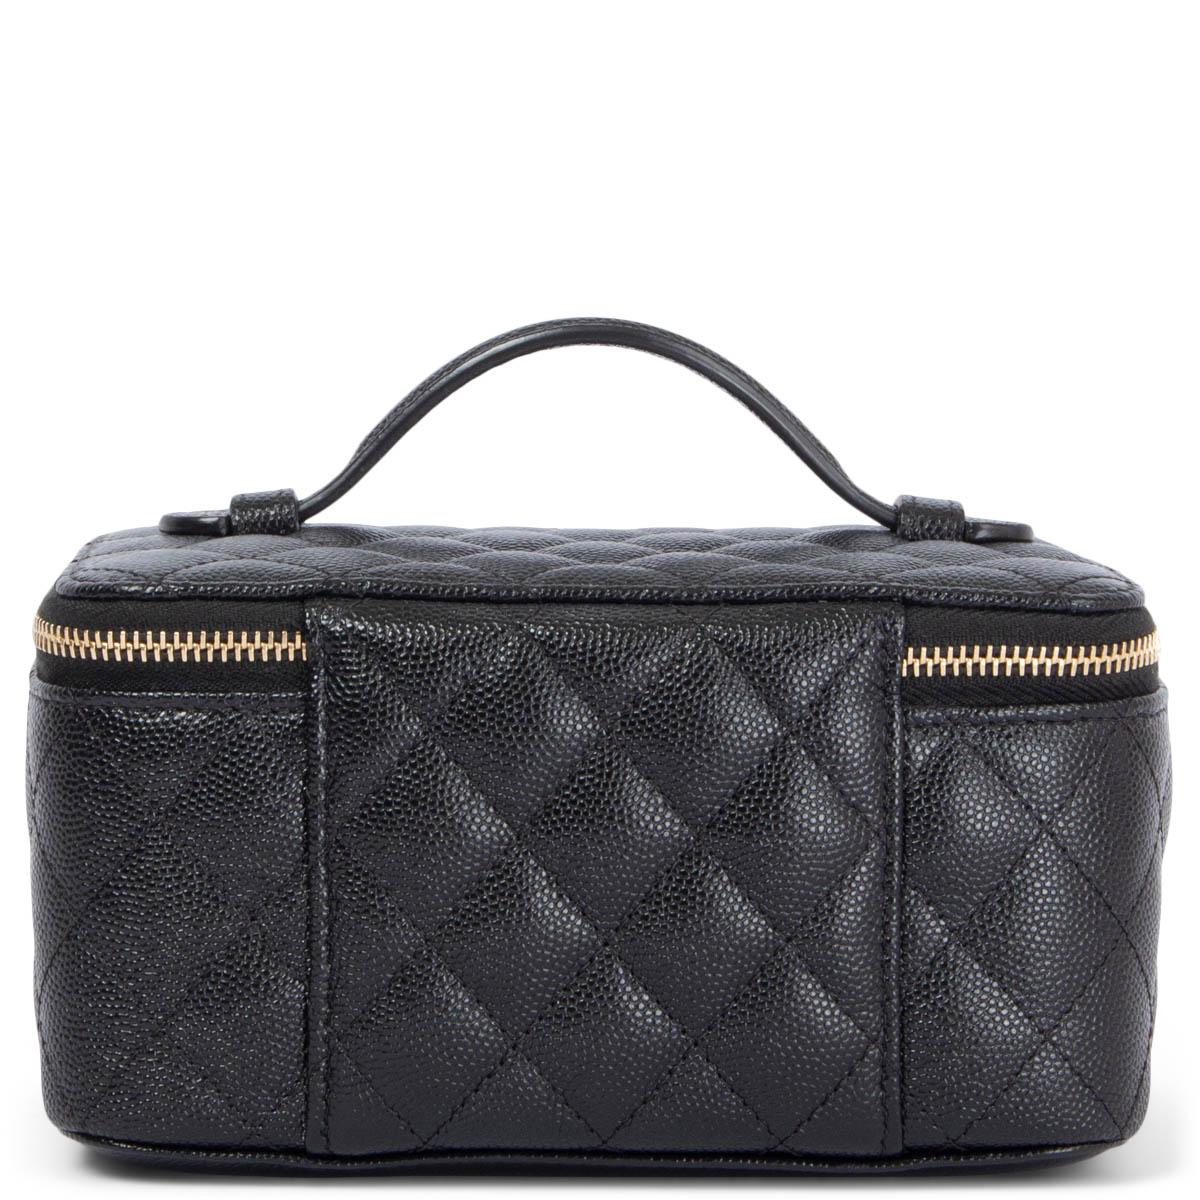 Women's CHANEL black Caviar leather 2020 20C JEWELLERY CASE Bag